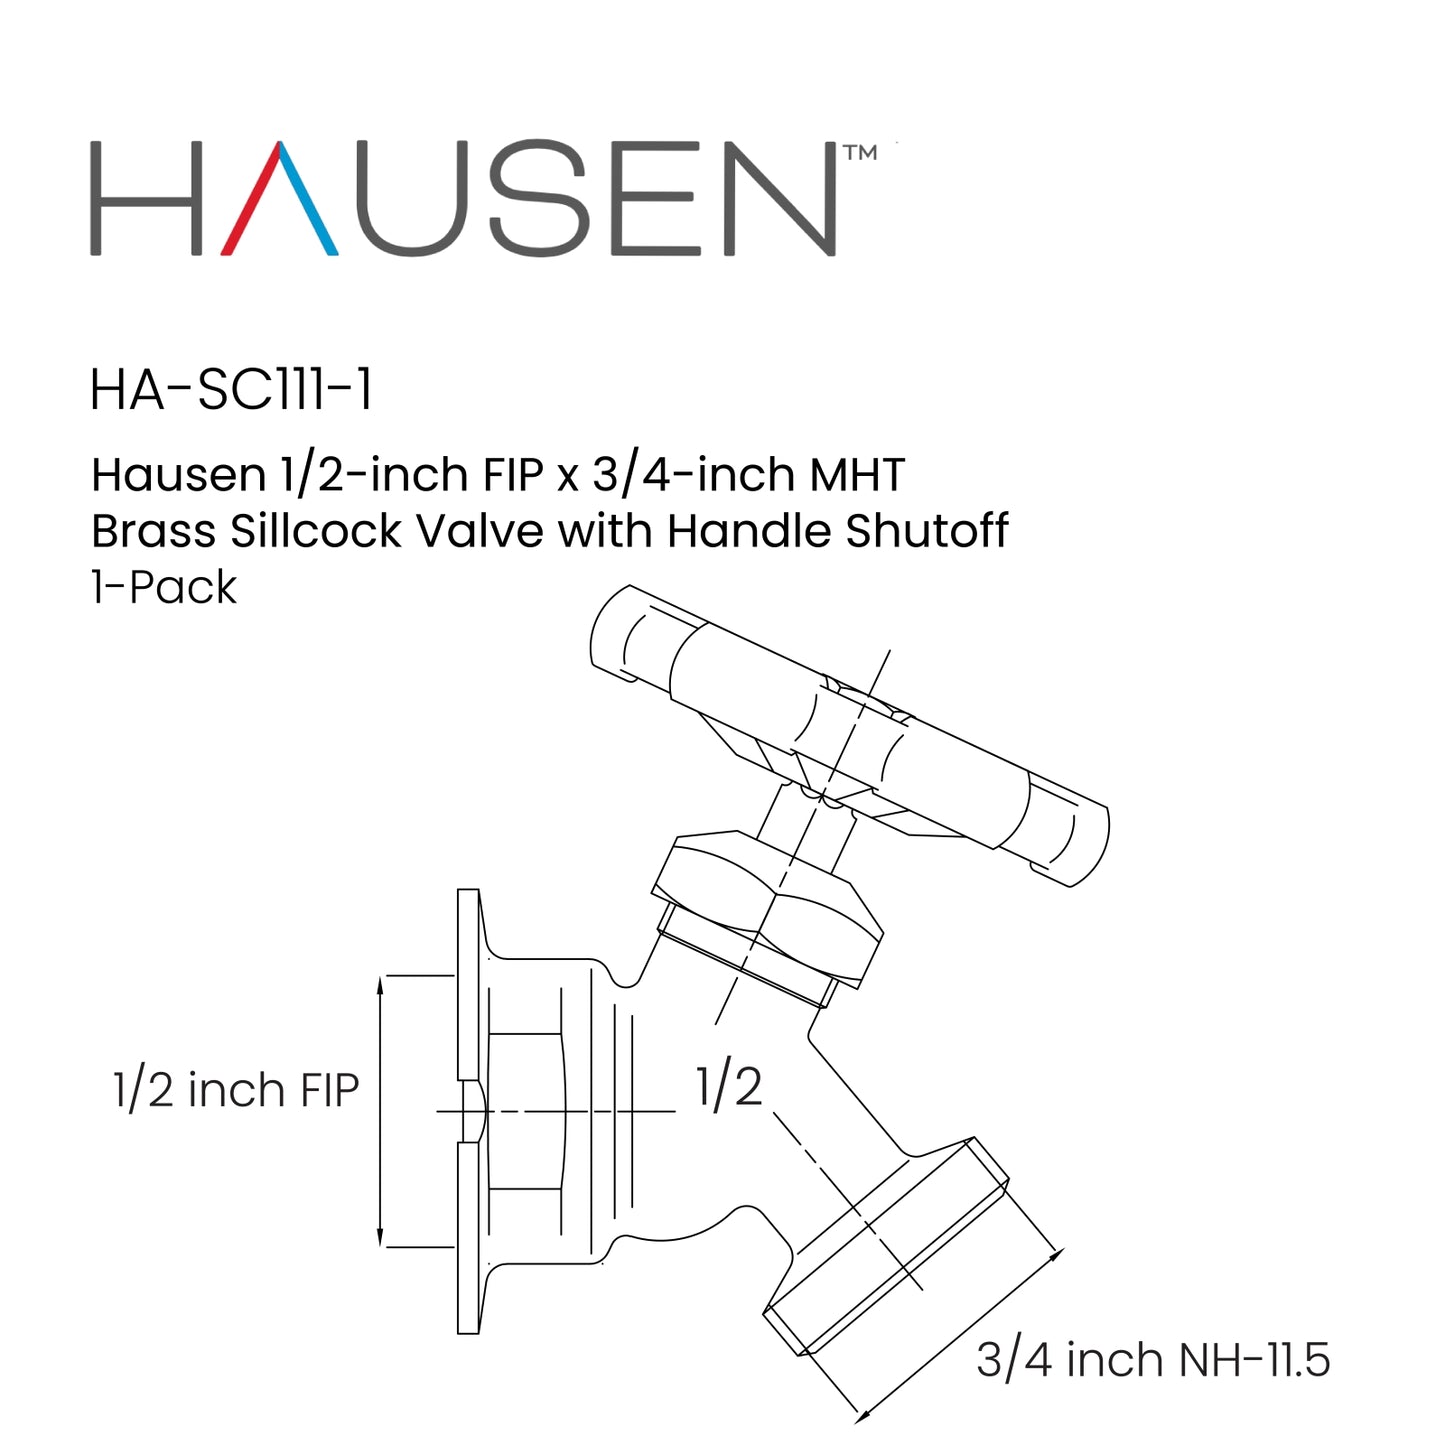 Hausen 1/2-inch FIP x 3/4-inch MHT Brass Sillcock Valve with Handle Shutoff, 1-Pack